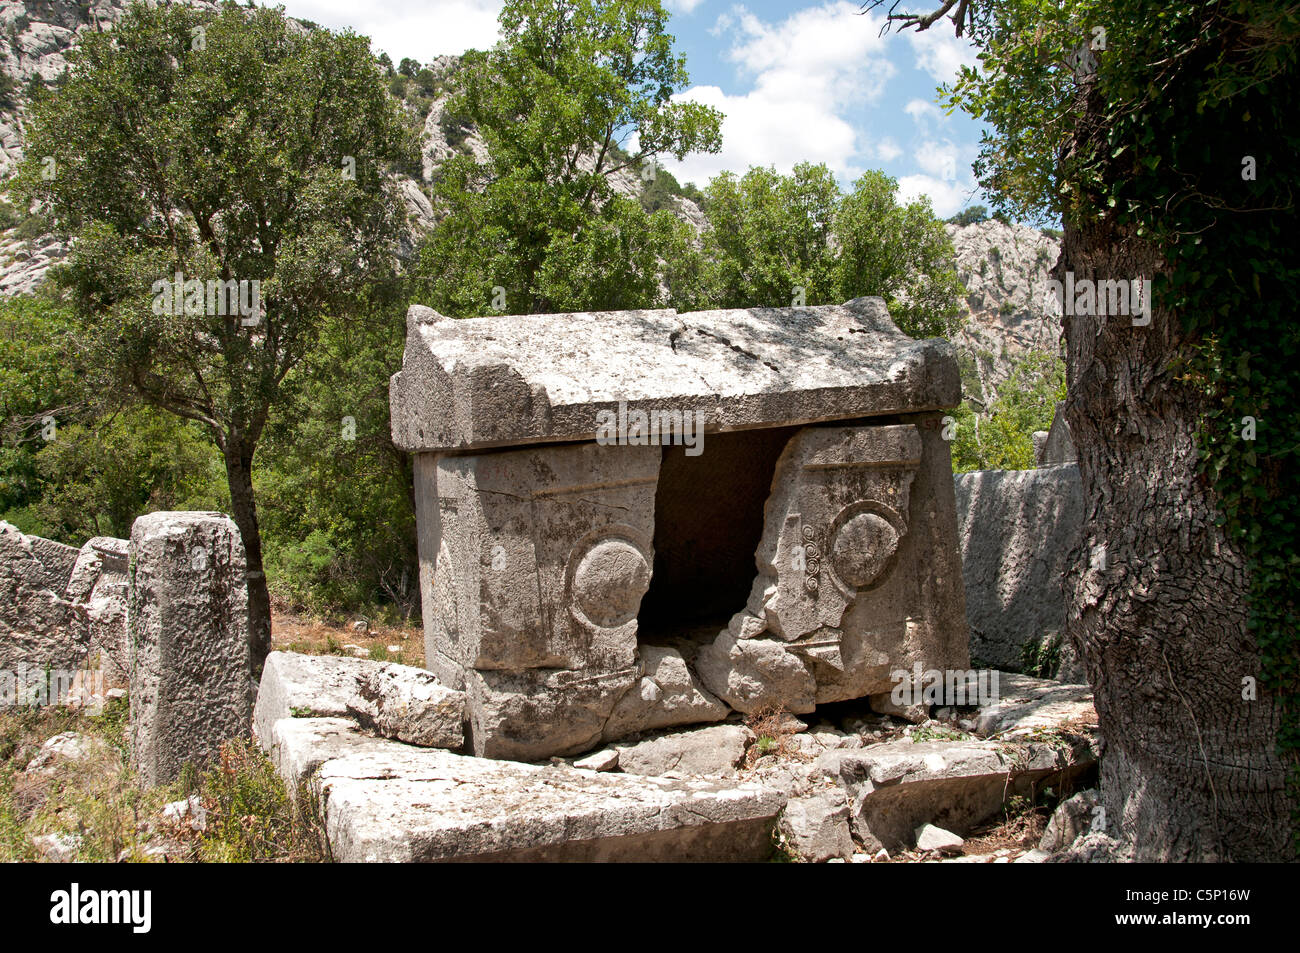 Tumba tumbas Termessos Turquía Antalya ciudad de Pisidia, 400 A.C. Foto de stock